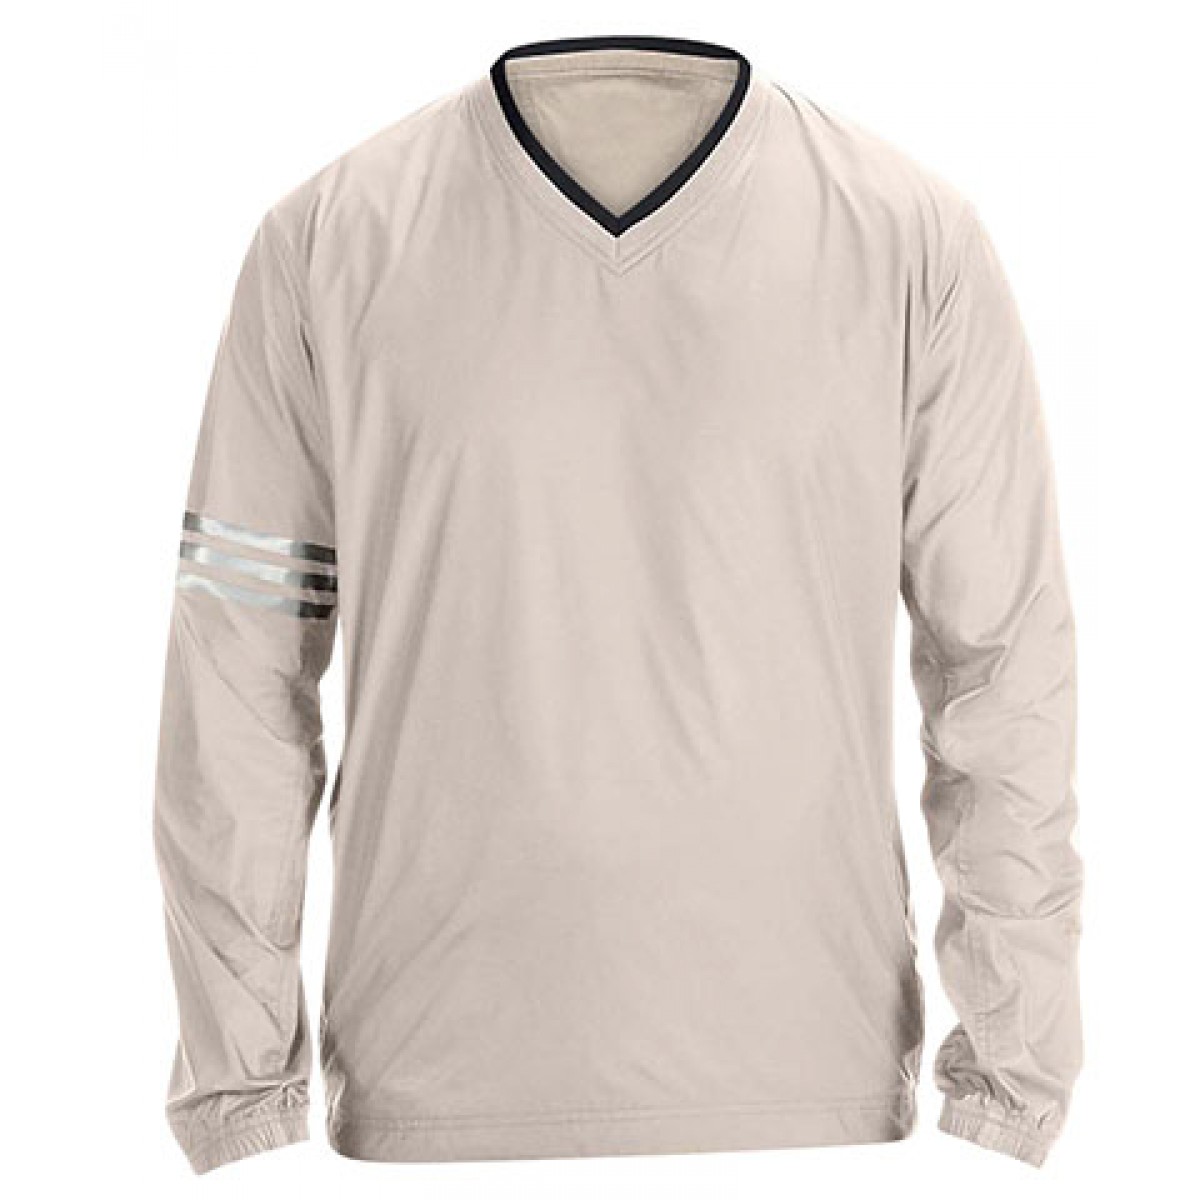 Adidas ClimaLite V-Neck Long Sleeve Wind Shirt-Brown-3XL